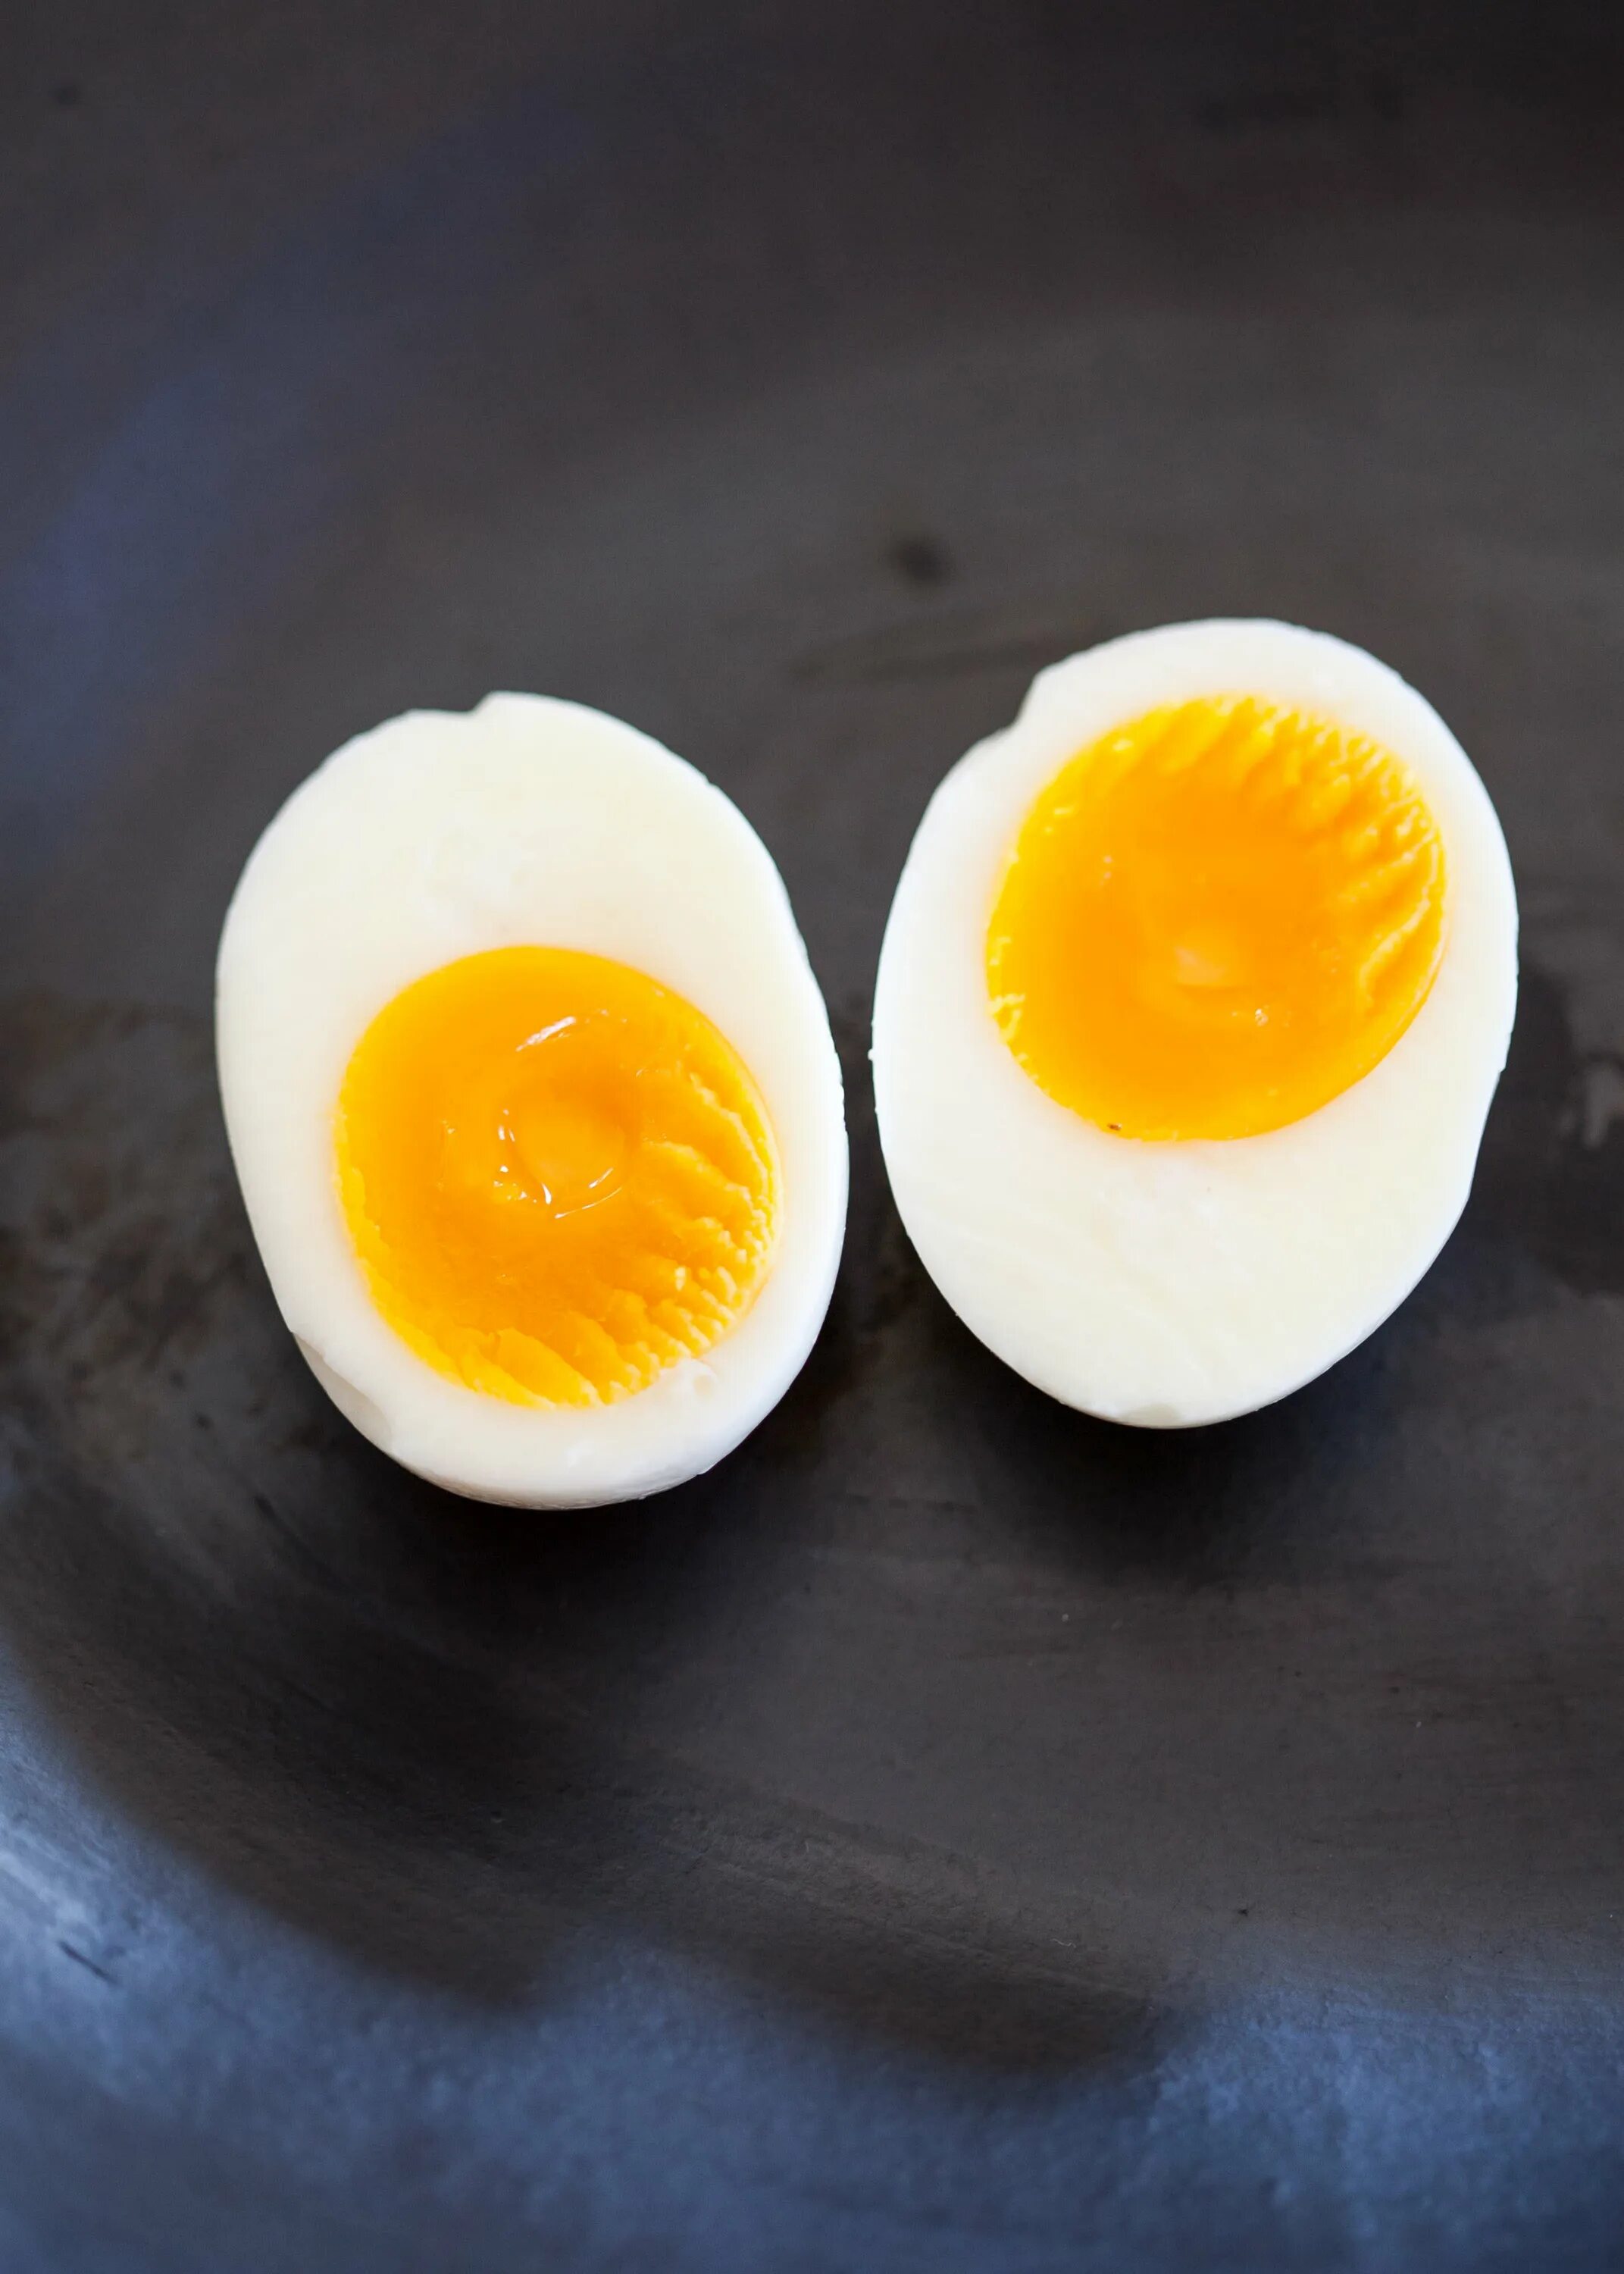 Сколько варятся яйца вкрутую. Яйцо всмятку яйца вкрутую. Вареное яйцо всмятку. Вареные яйца в смятку. Яйца вареные вкрутую и всмятку.